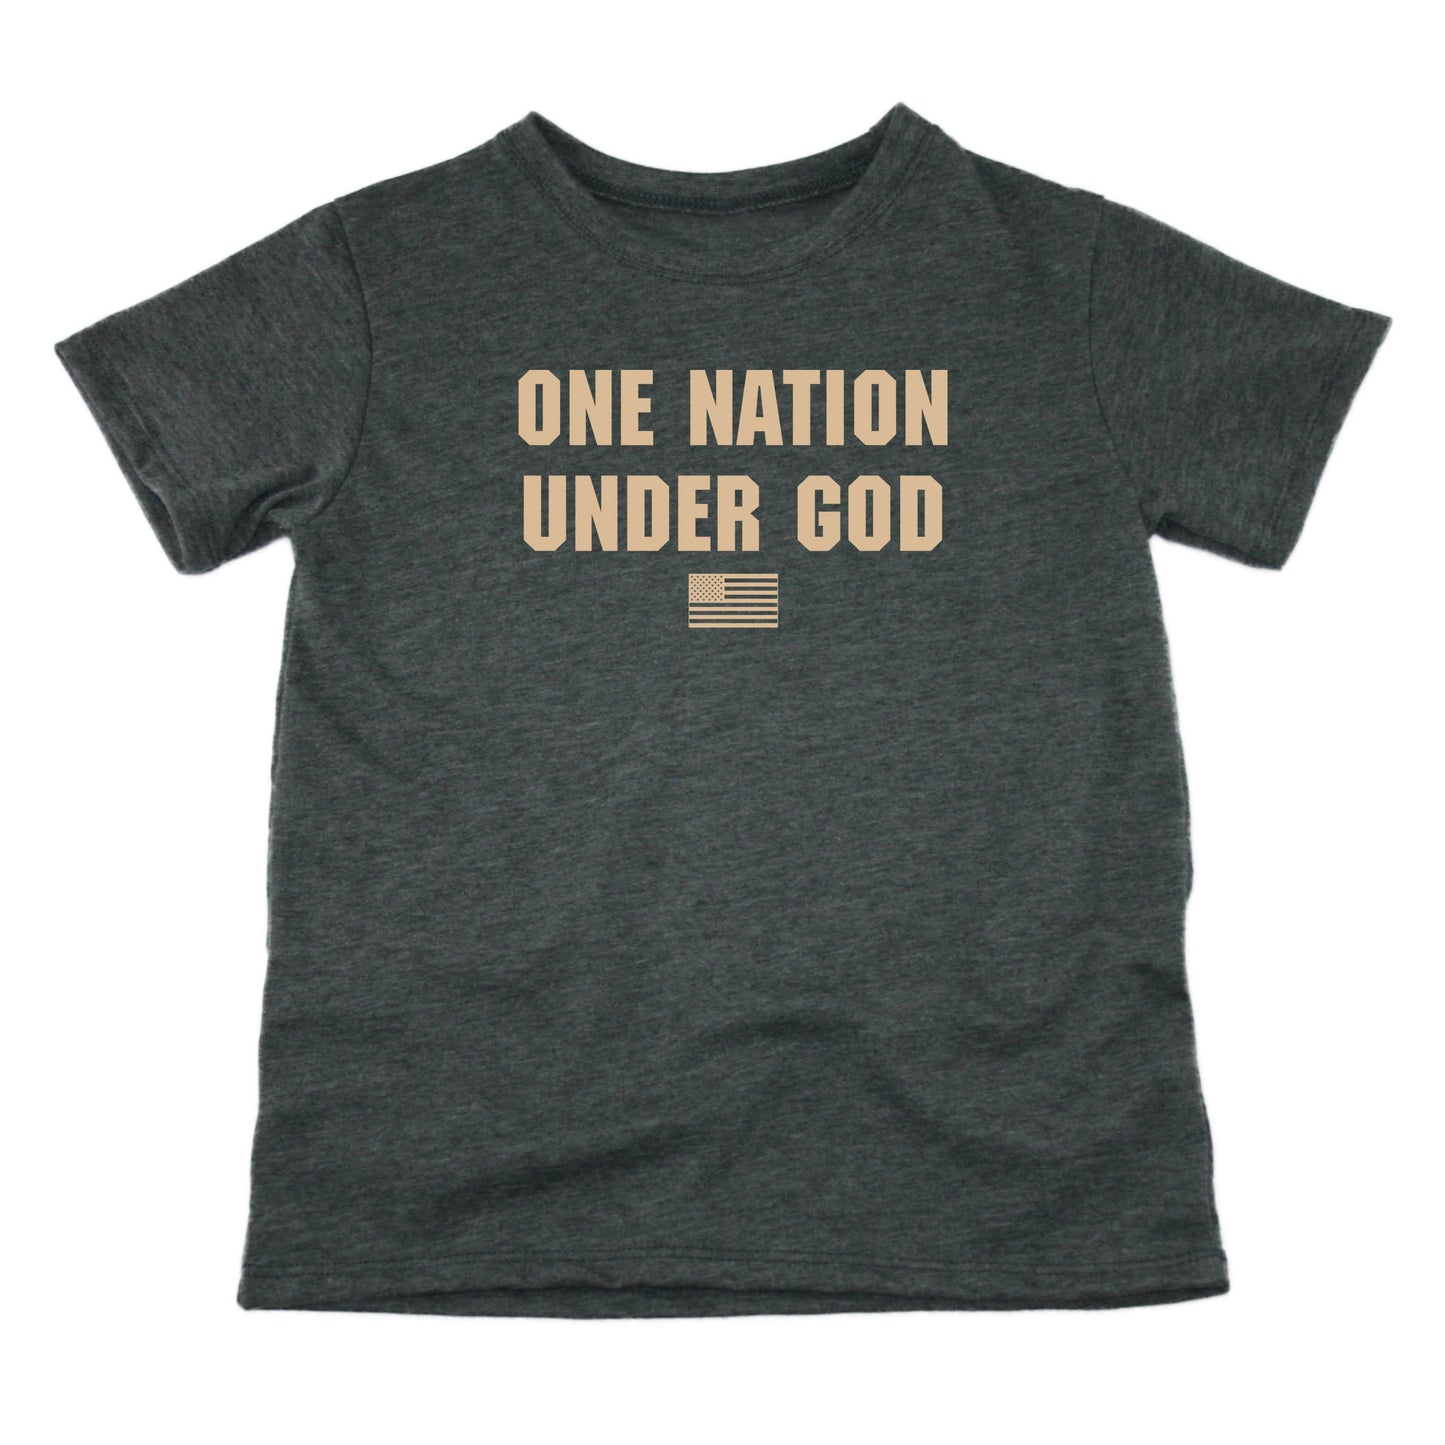 One Nation Under God - Kids' Tee